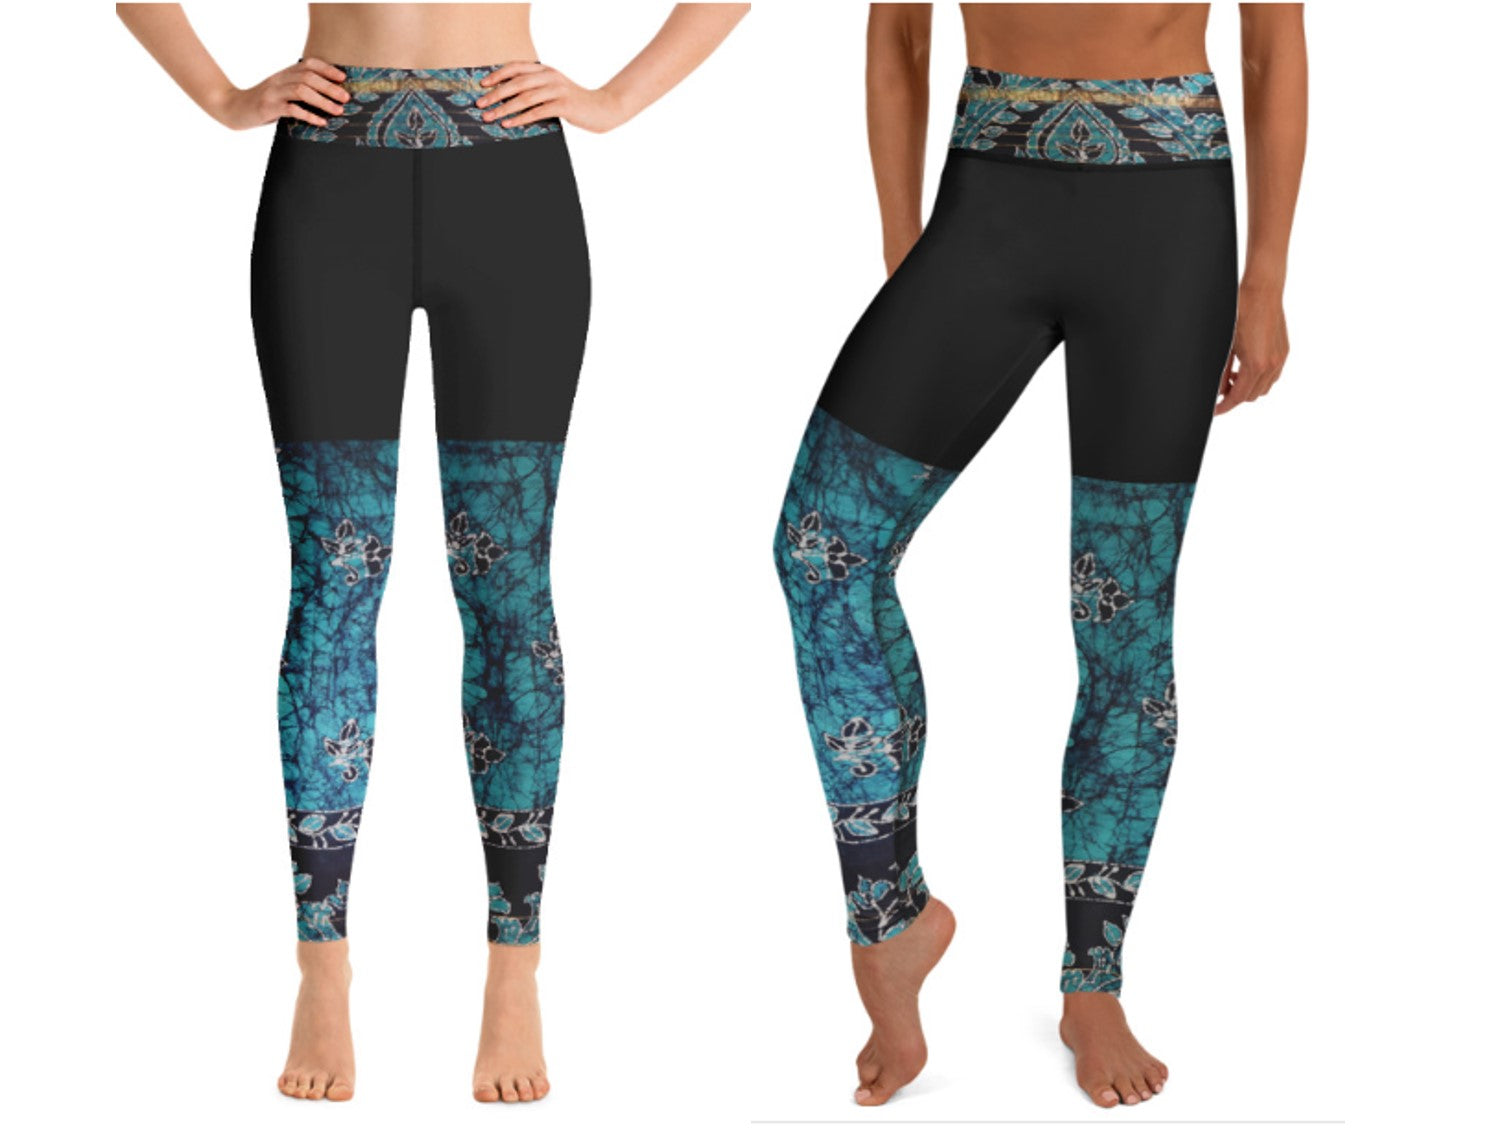 Yoga pants- black with a splash of teal green. High waist women's